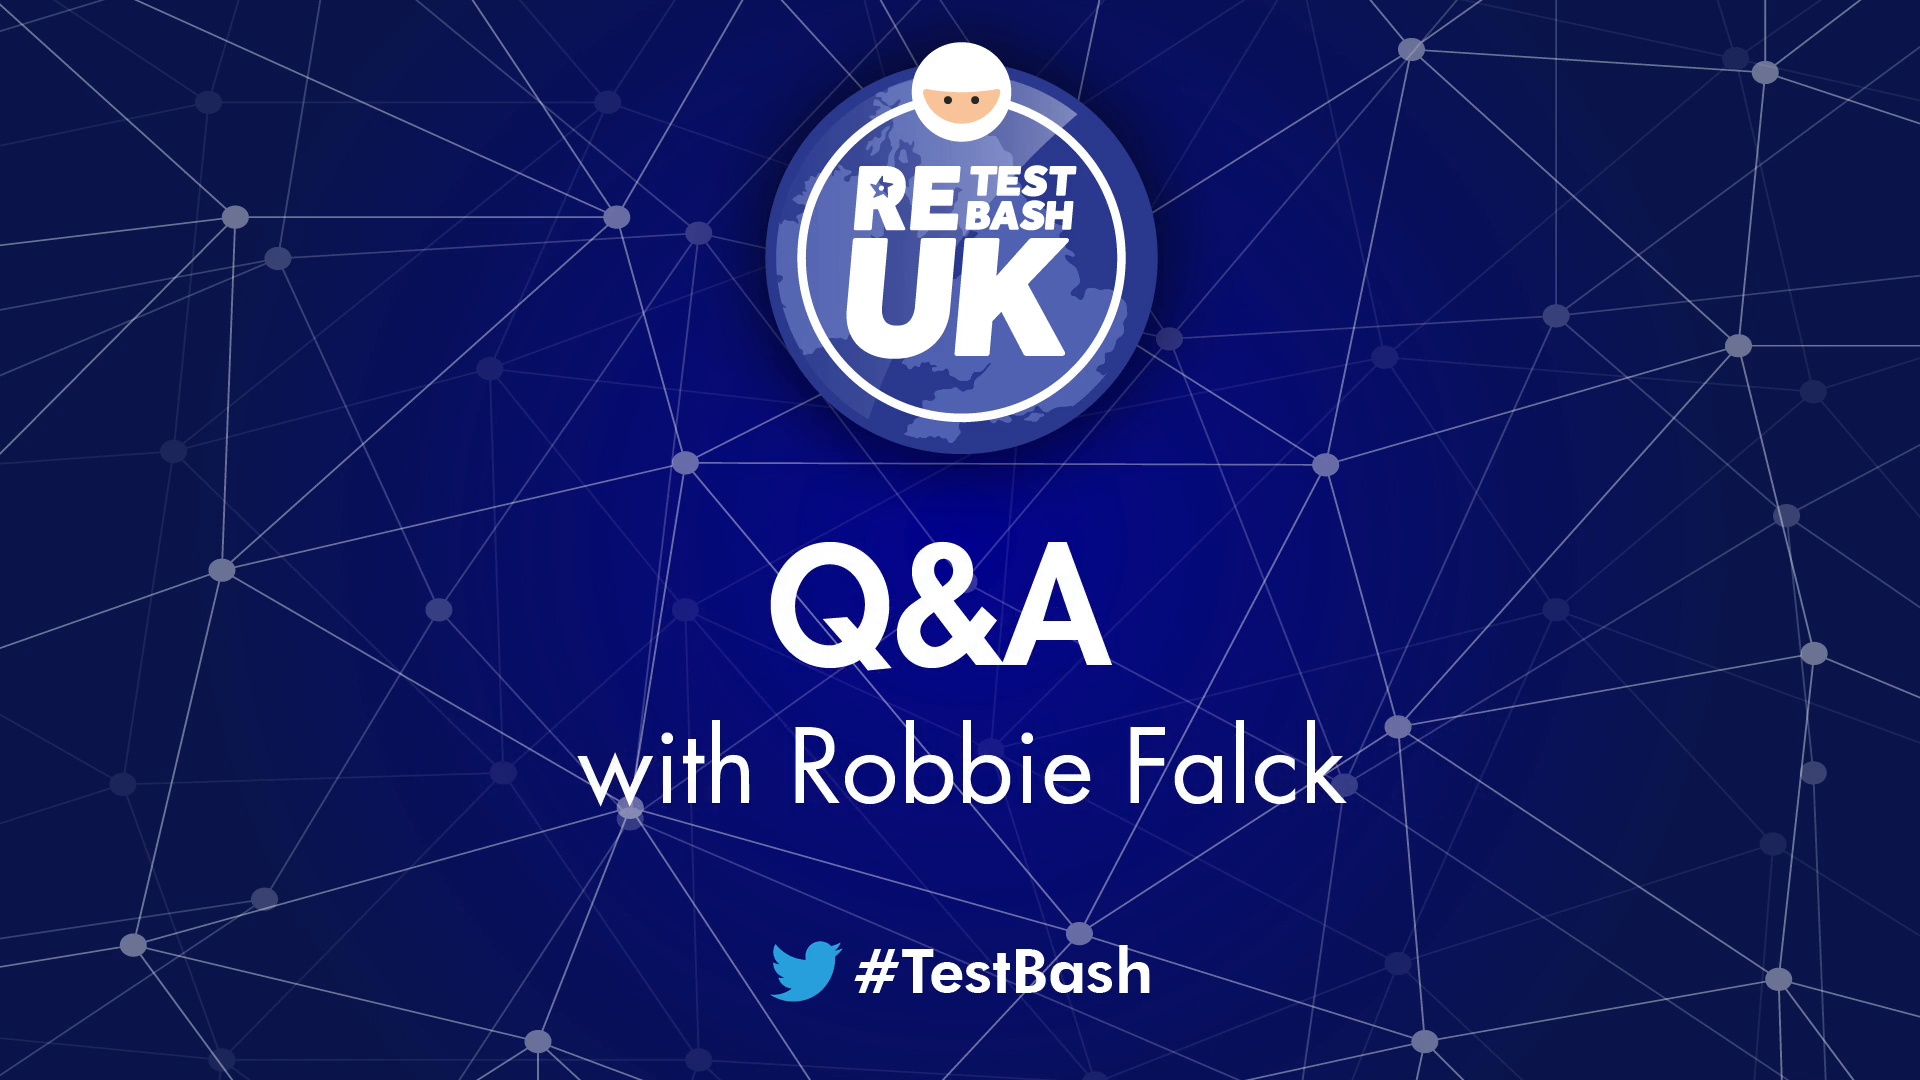 ReTestBash UK 2022: Live Q&A with Robbie Falck